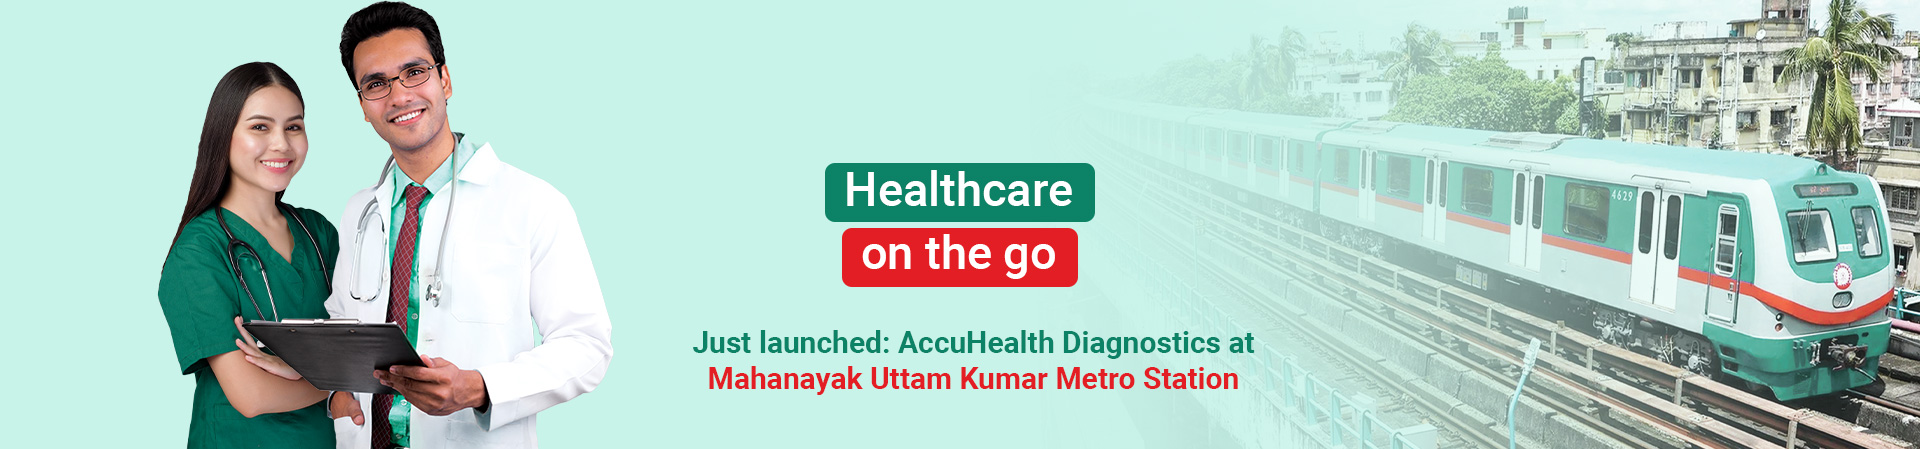 Healthcare on the go: AccuHealth Diagnostics now at the Mahanayak Uttam Kumar Metro station